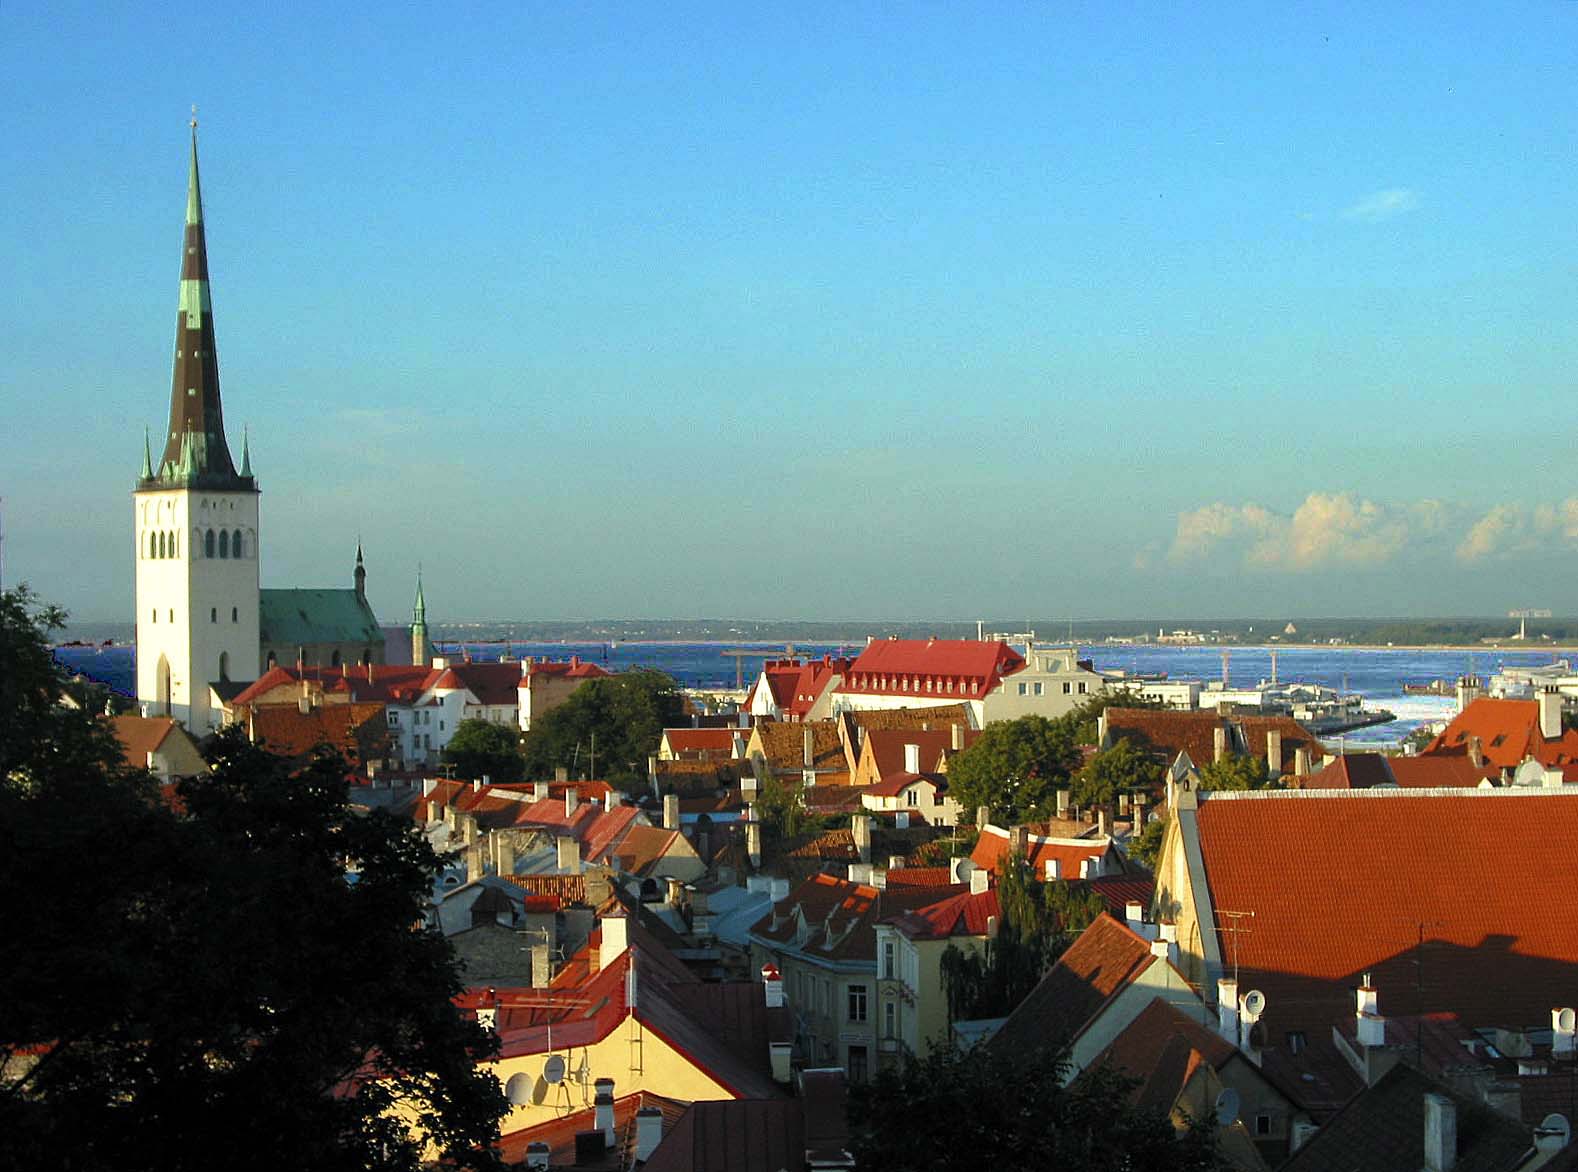 Best Estonian conferences in 2016 recognised in Tallinn